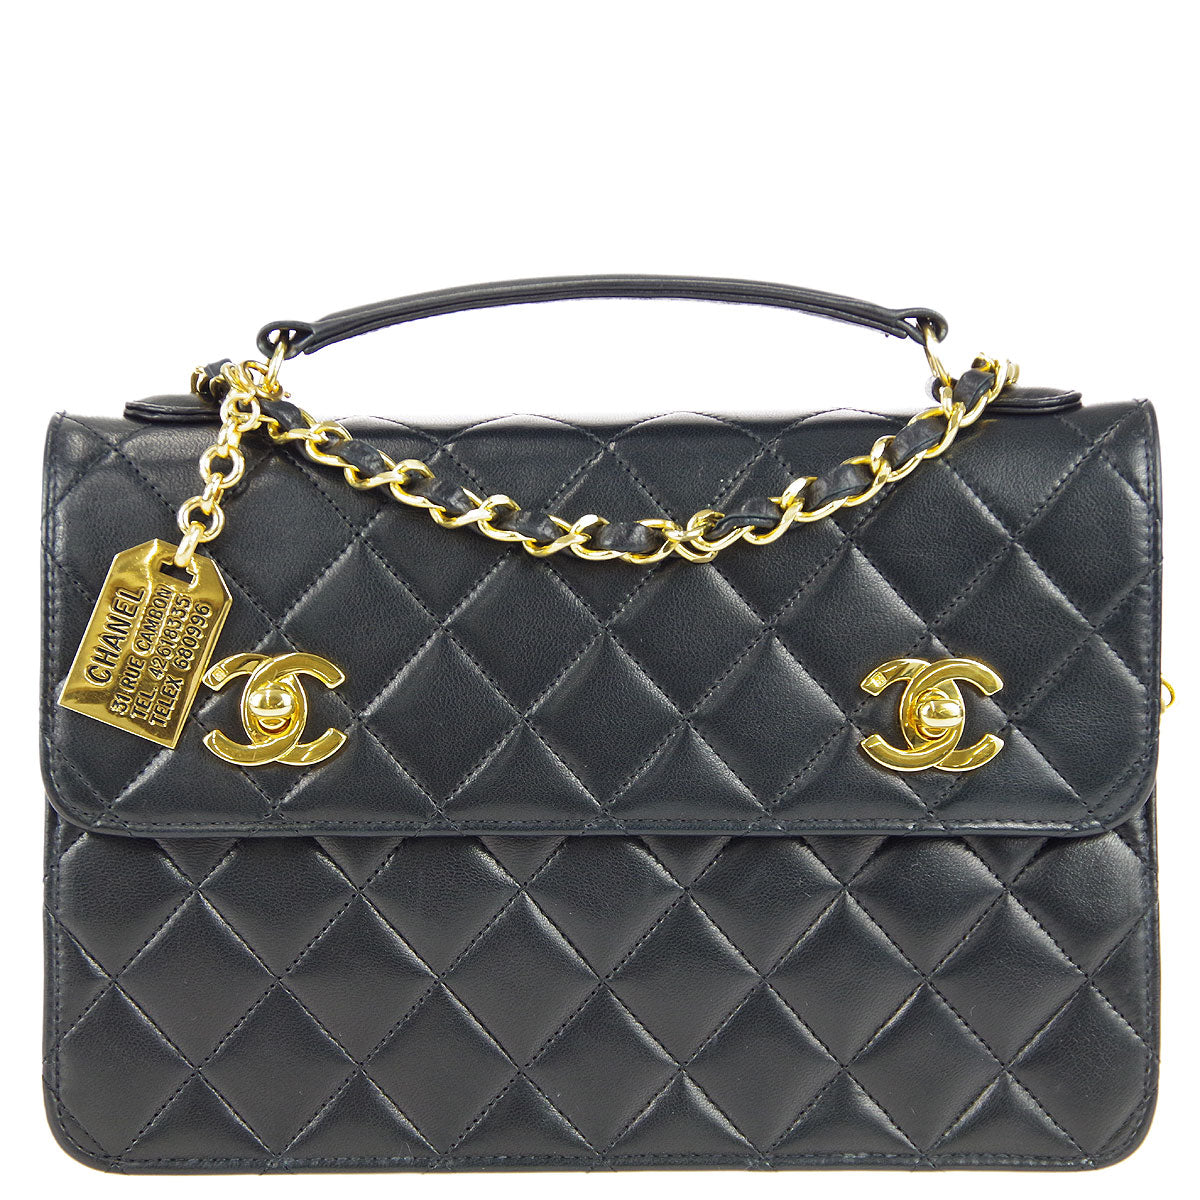 Chanel * 1989-1991 Small Double Turnlock Handbag Black Lambskin